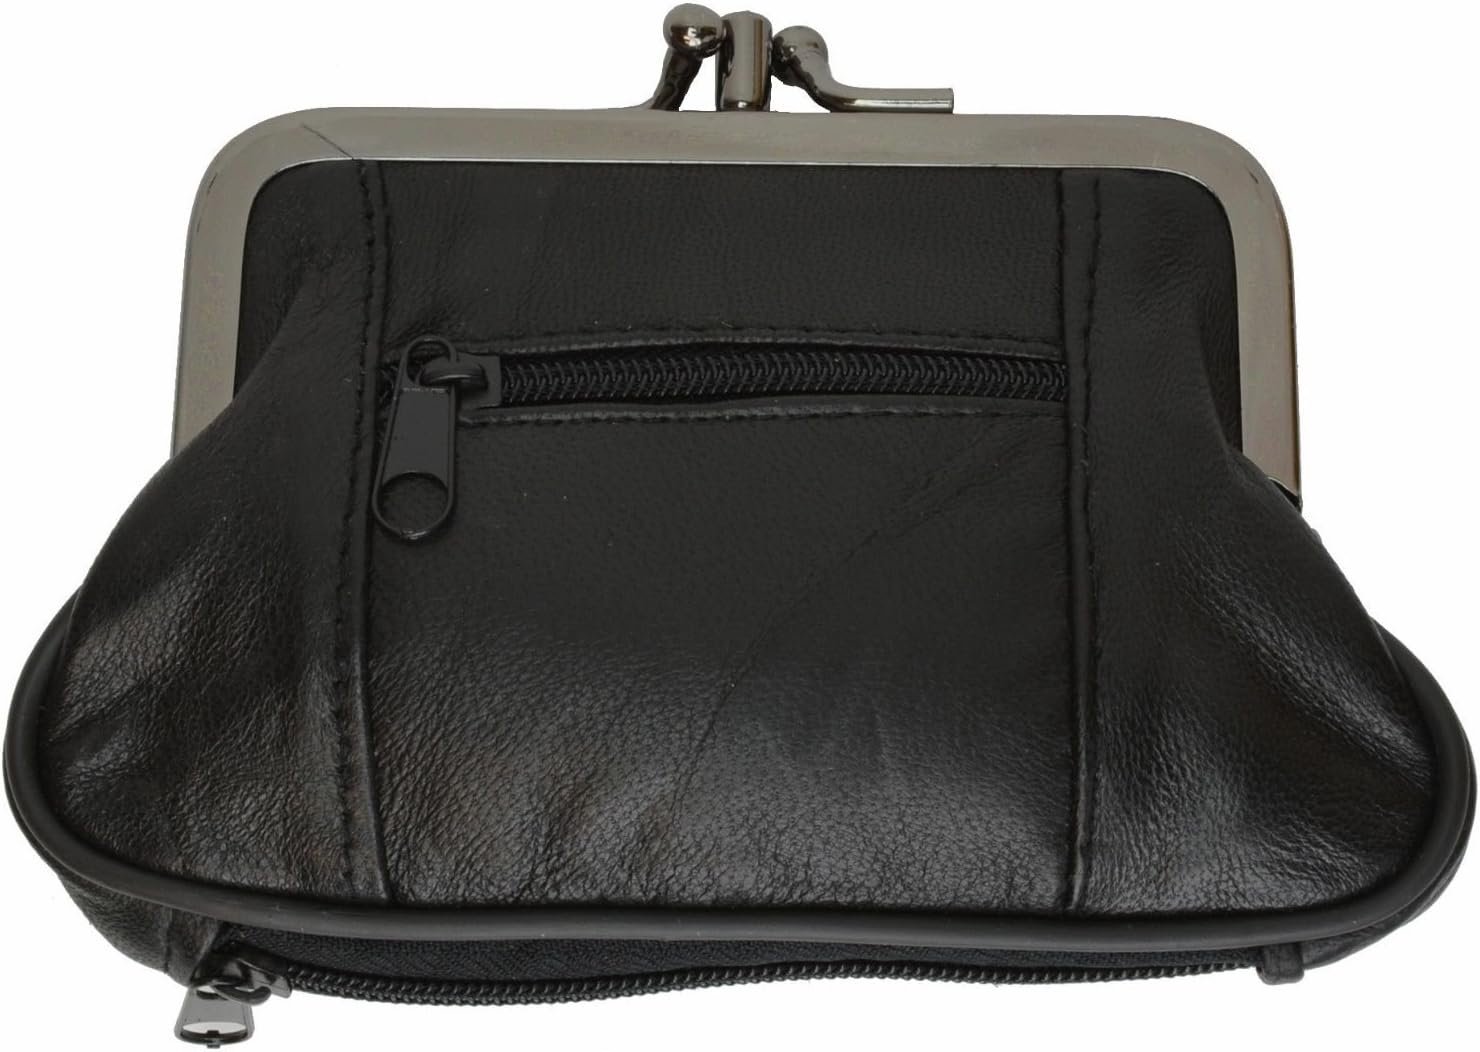 Leatherboss Genuine Leather Slim Designer Womens Coin Holder Purse Zipper Pocket Wallet with Metal Frame, Black